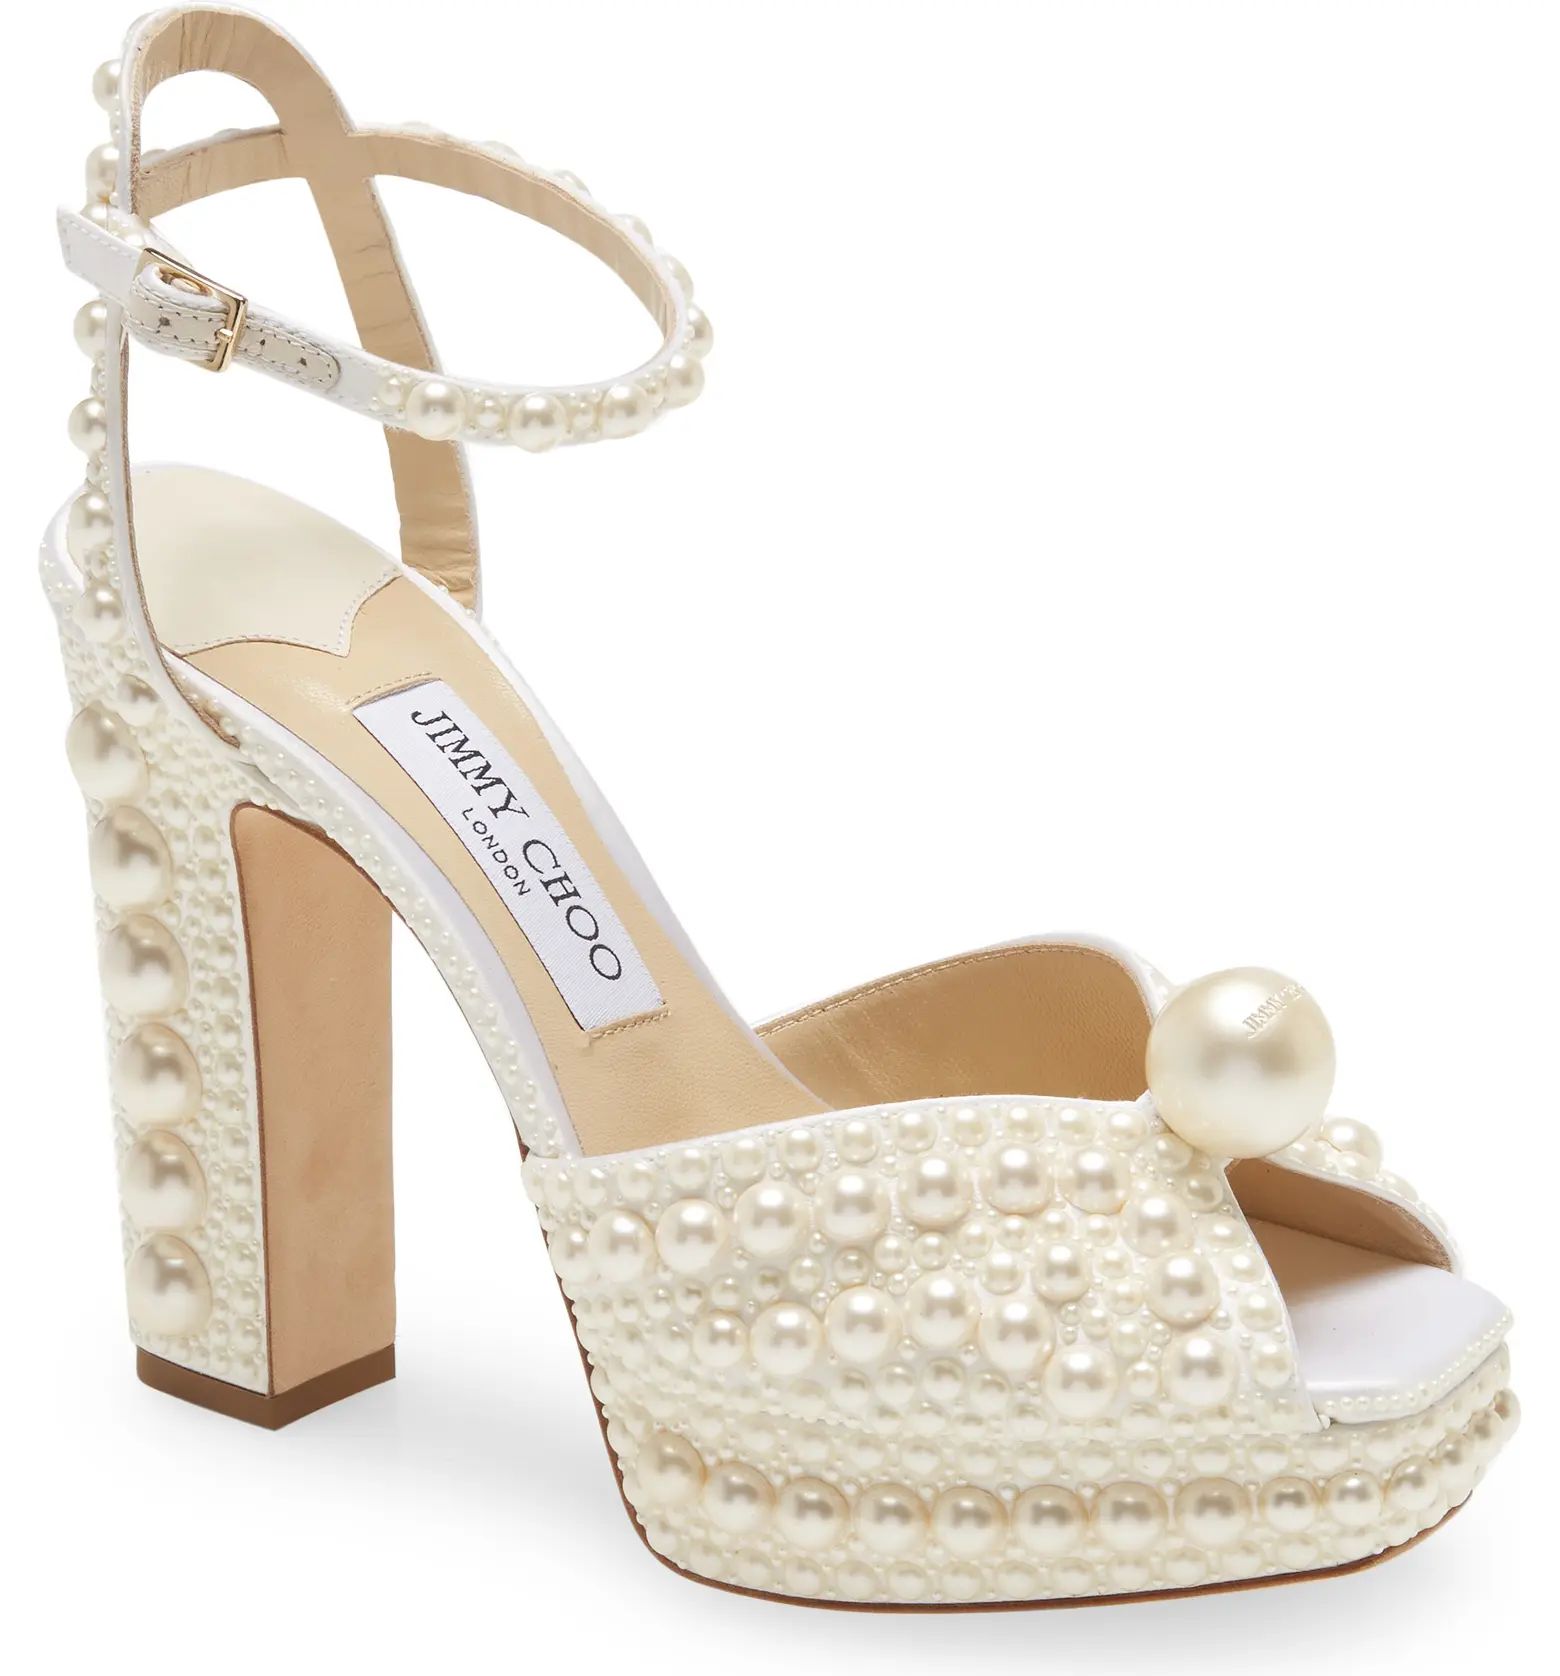 Sacaria Imitation Pearl Embellished Ankle Strap SandalJIMMY CHOO | Nordstrom